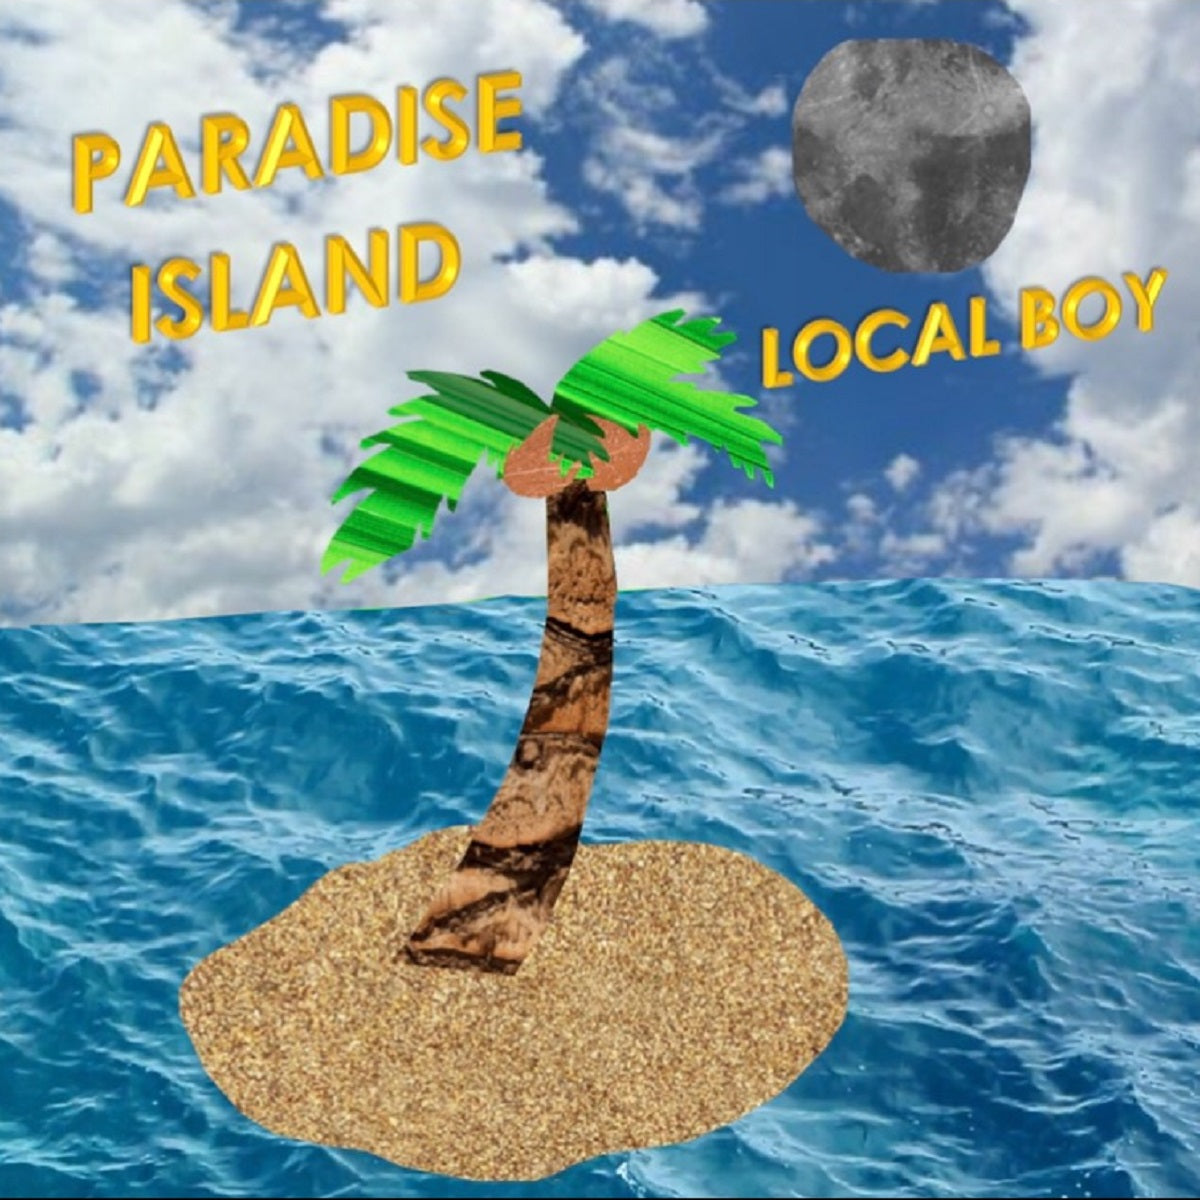 Local Boy – ‘Paradise Island’